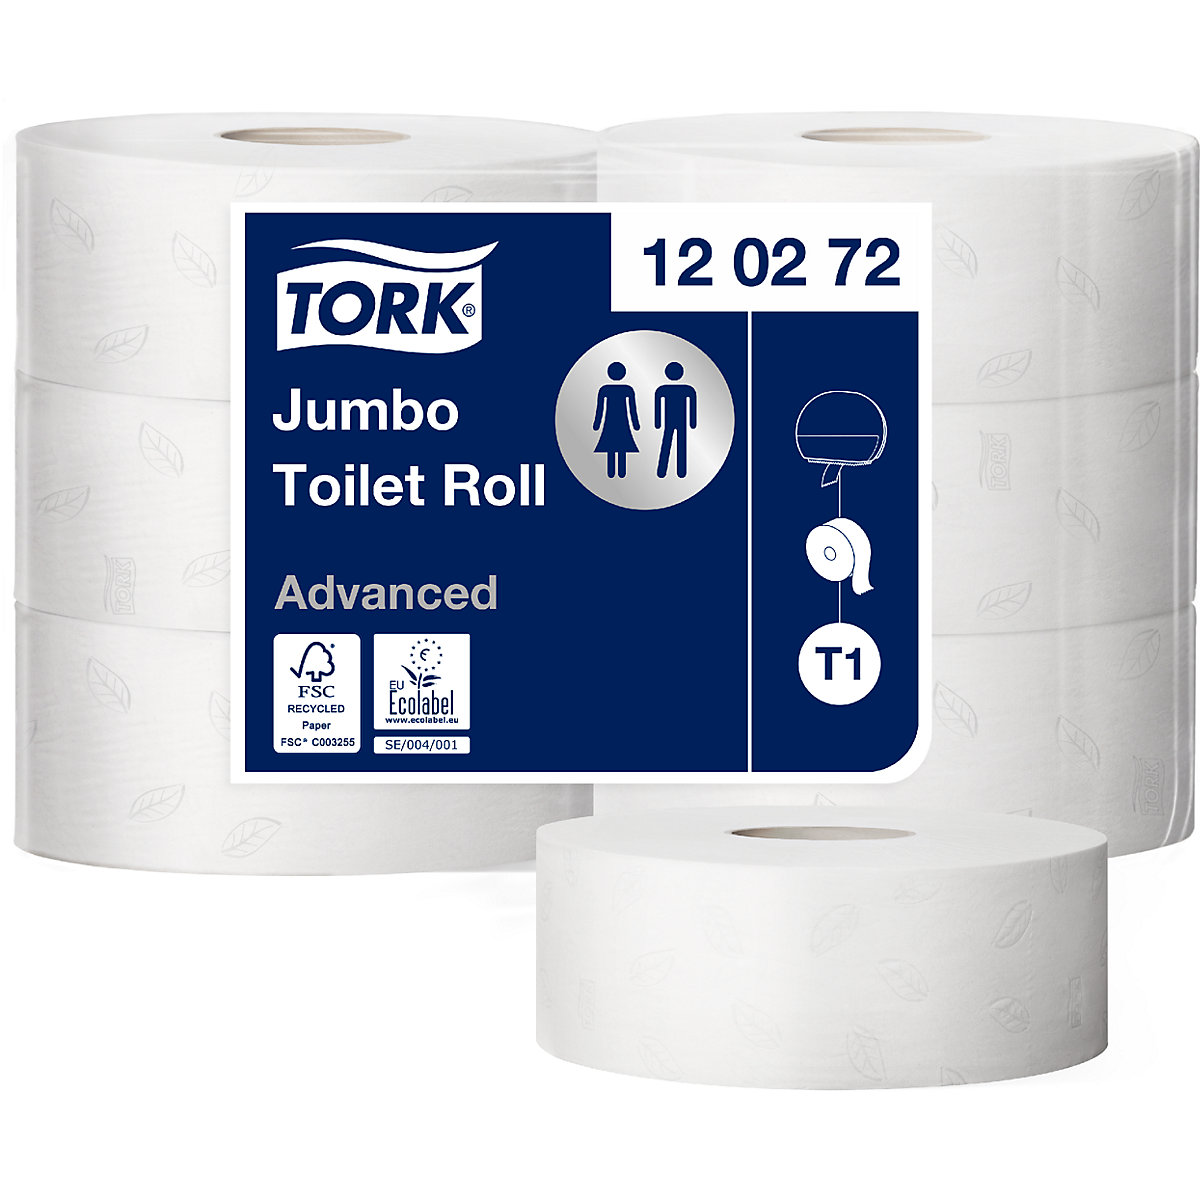 Jumbo – toiletpapier, industriële rol – TORK